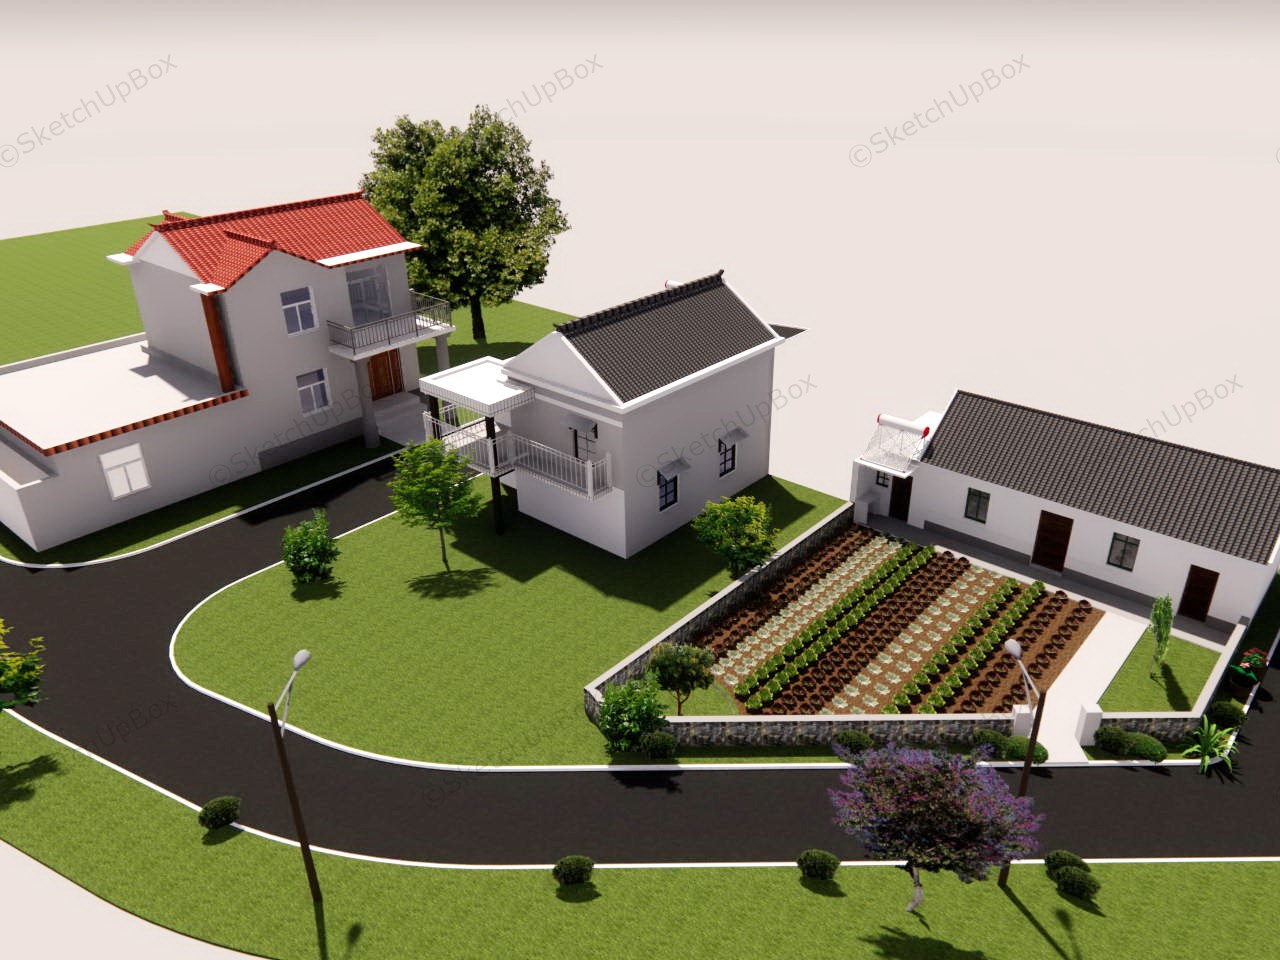 Modern House Design In Village sketchup model preview - SketchupBox